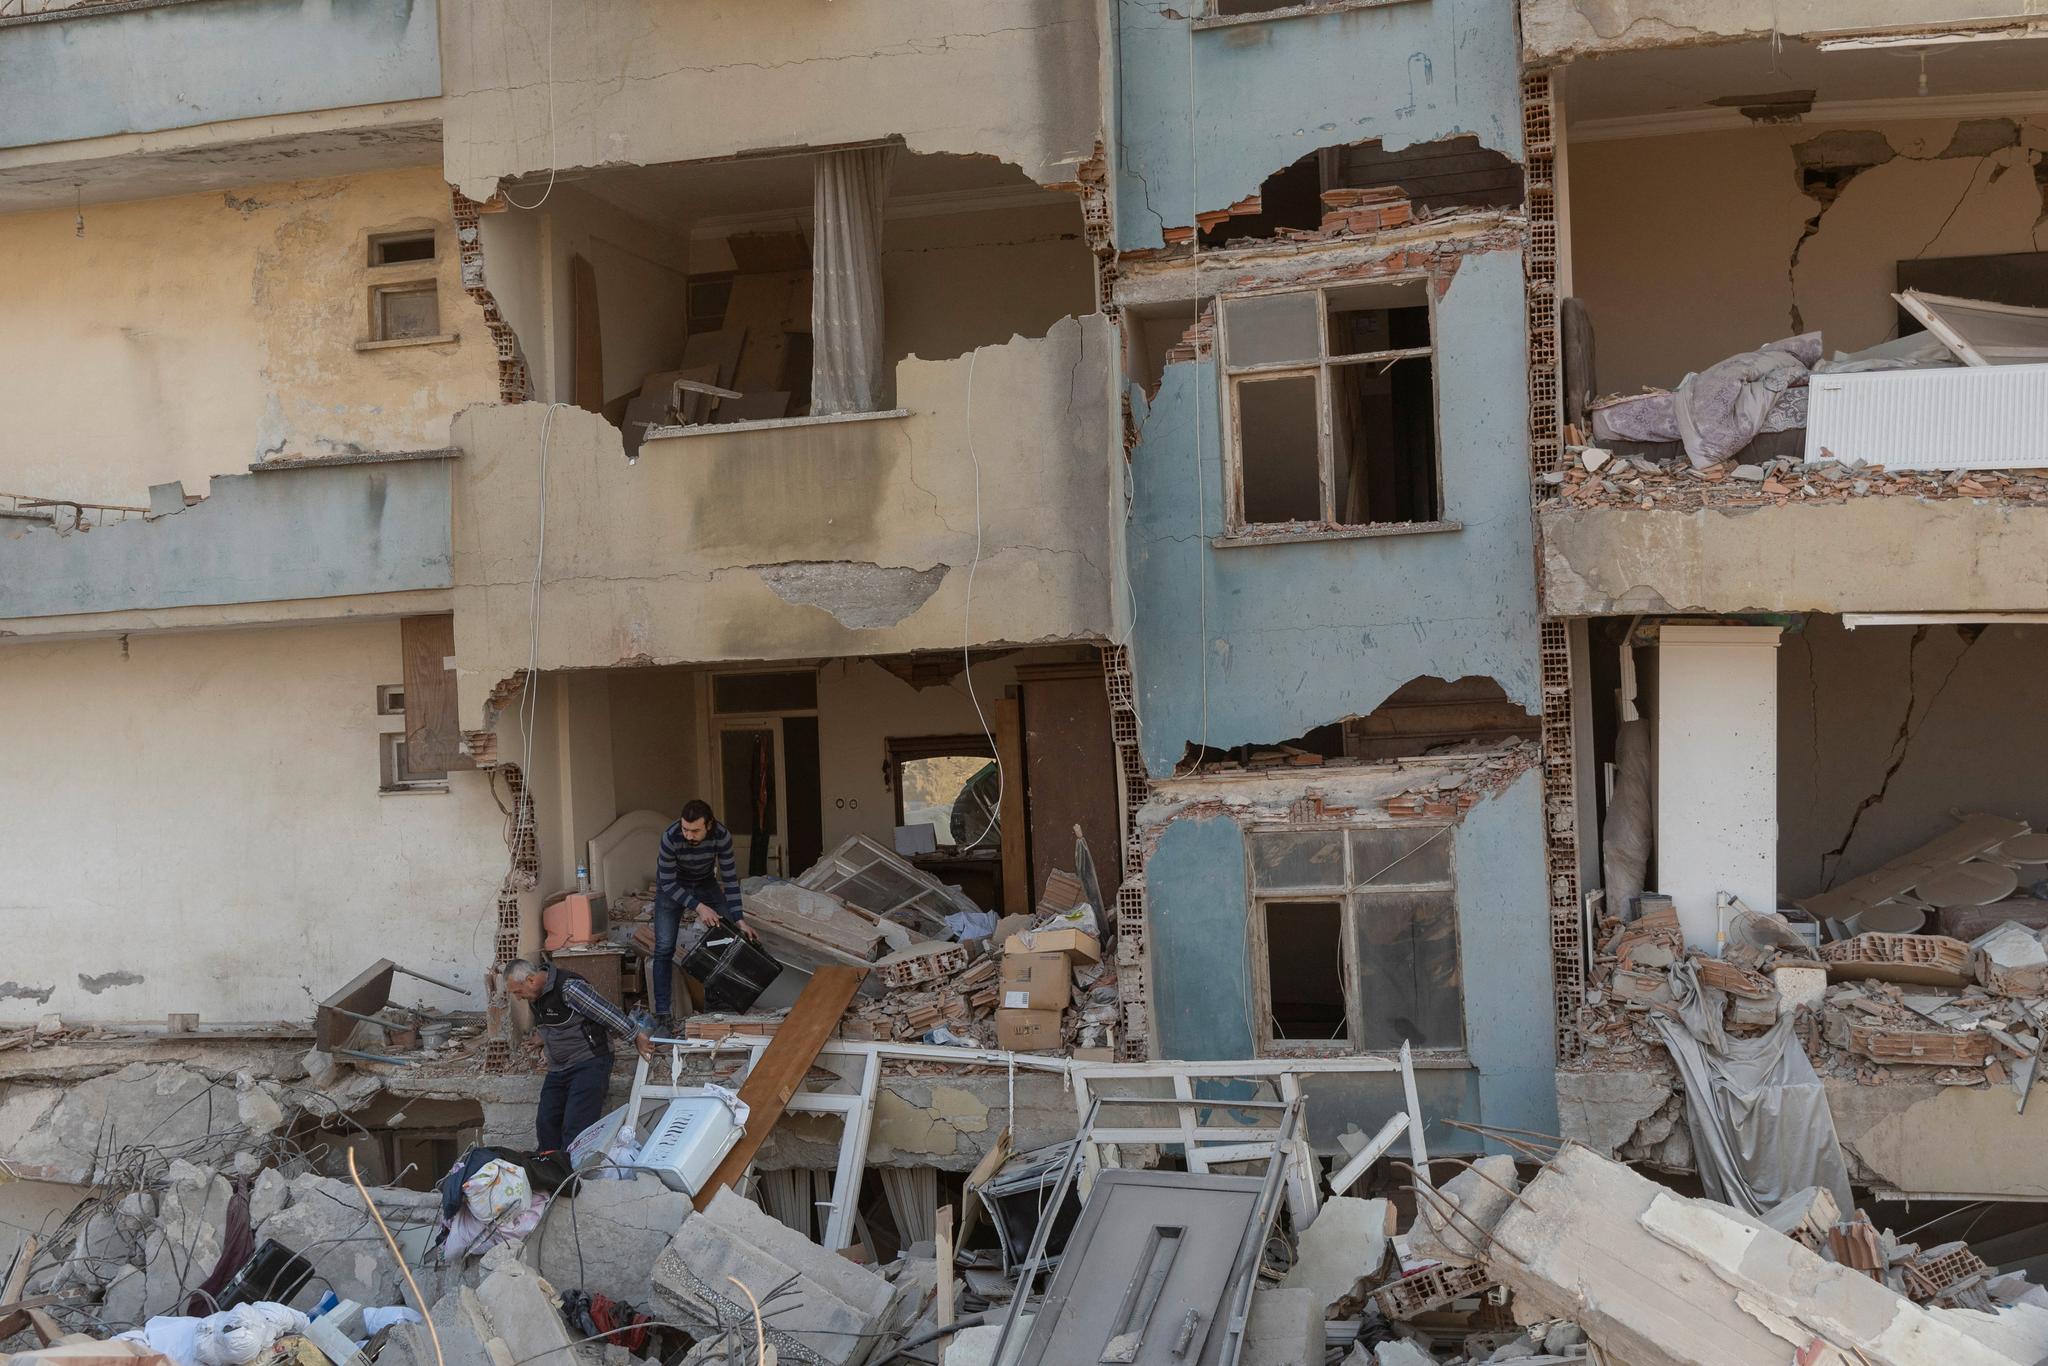 A new earthquake struck Turkey and Syria